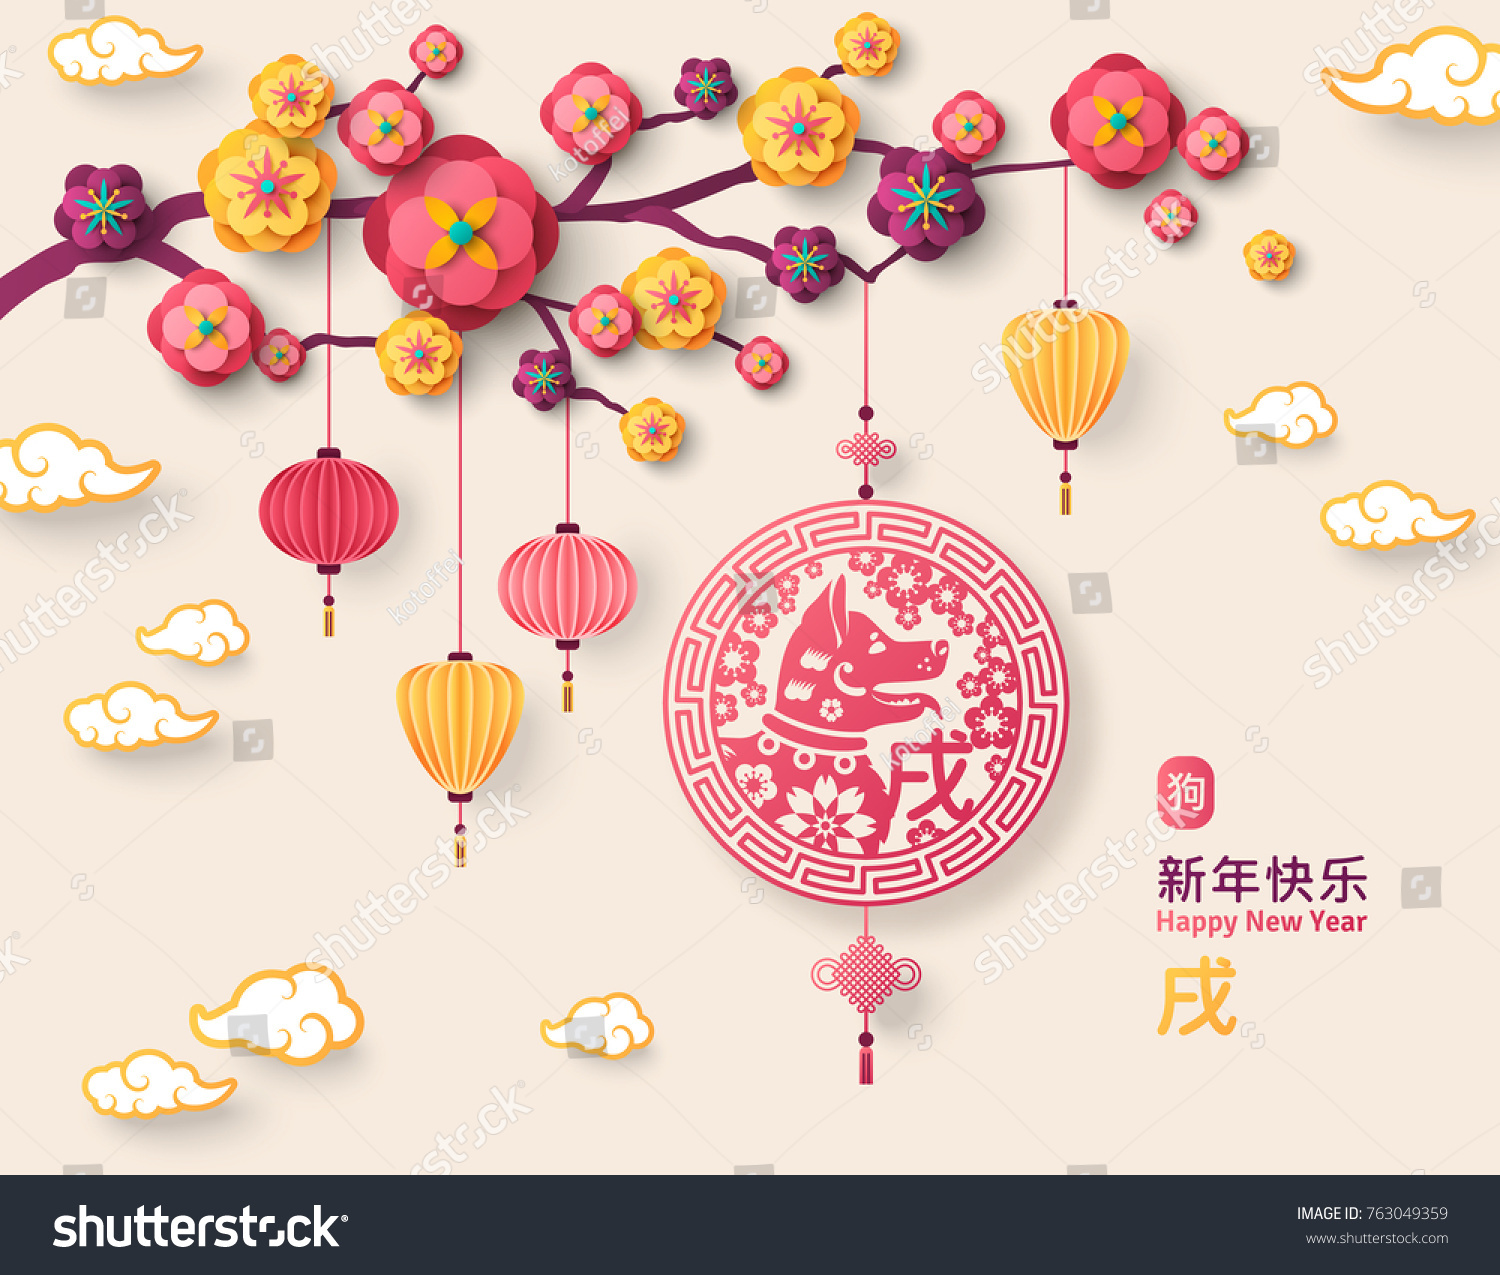 stock vector  chinese new year greeting card with dog emblem and sakura branch long hieroglyphs translation 763049359